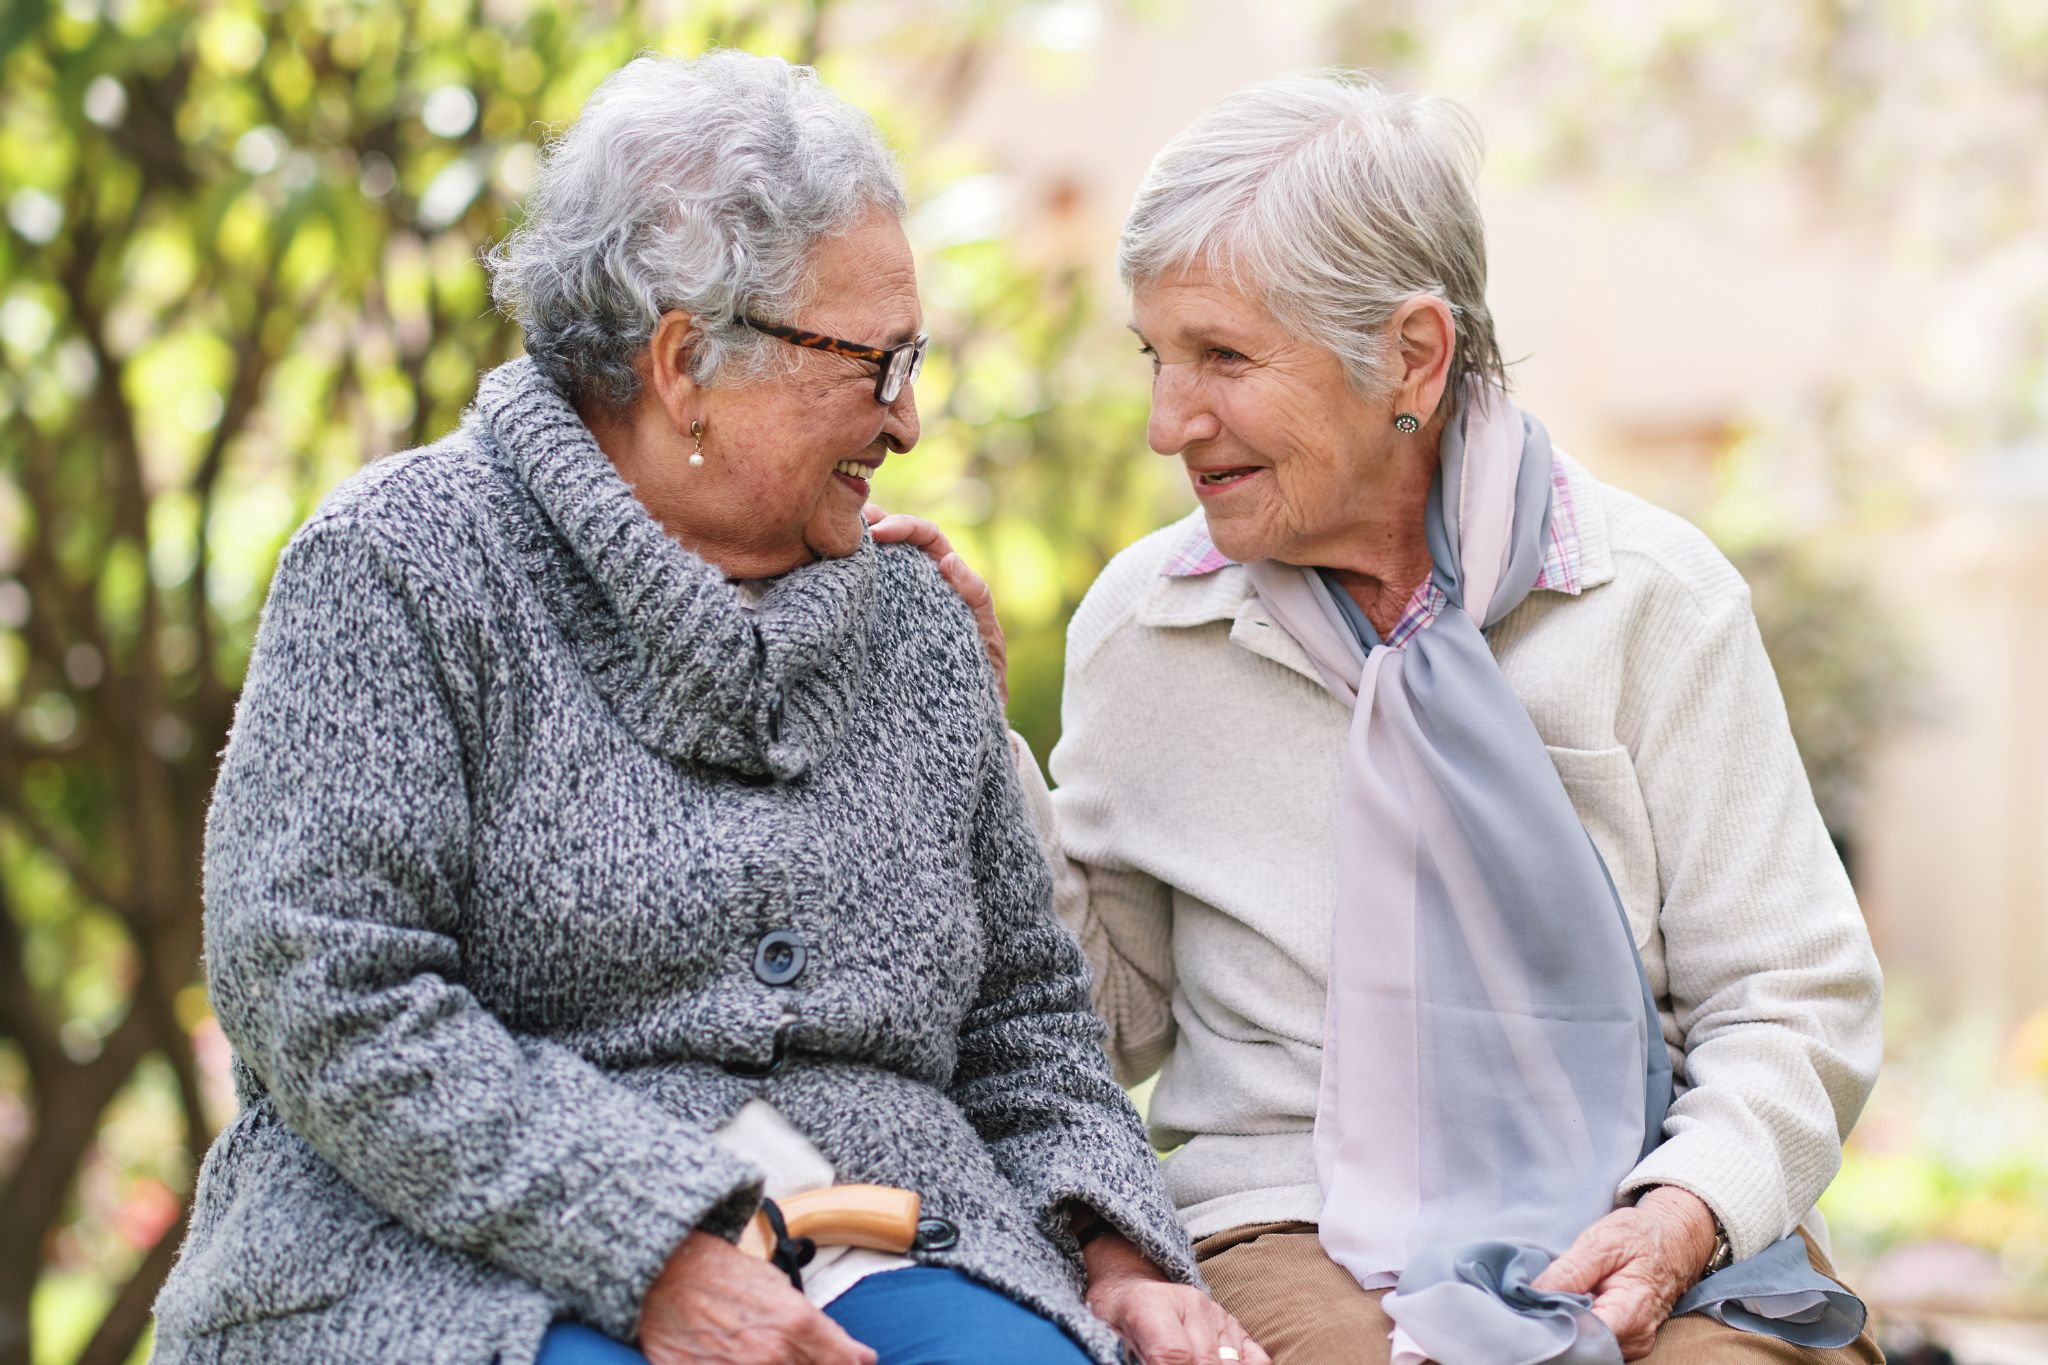 VRS retirement relationships exploring the dynamics of relationships in retirement living